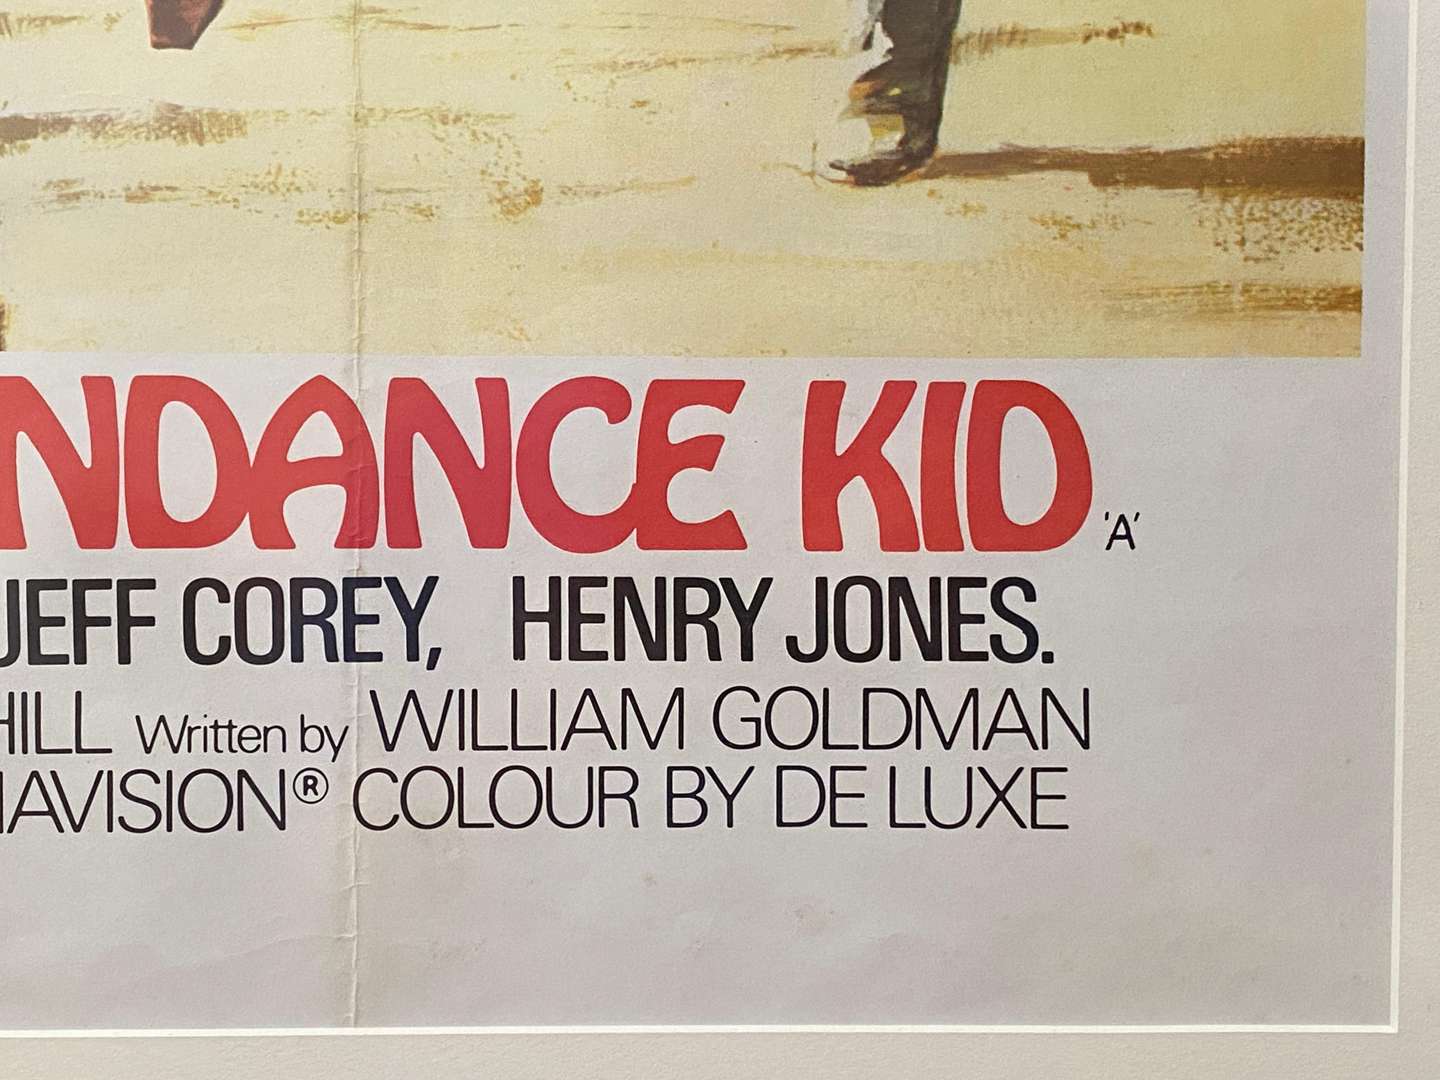 <p>“BUTCH CASSIDY AND THE SUNDANCE KID” framed original film poster</p>